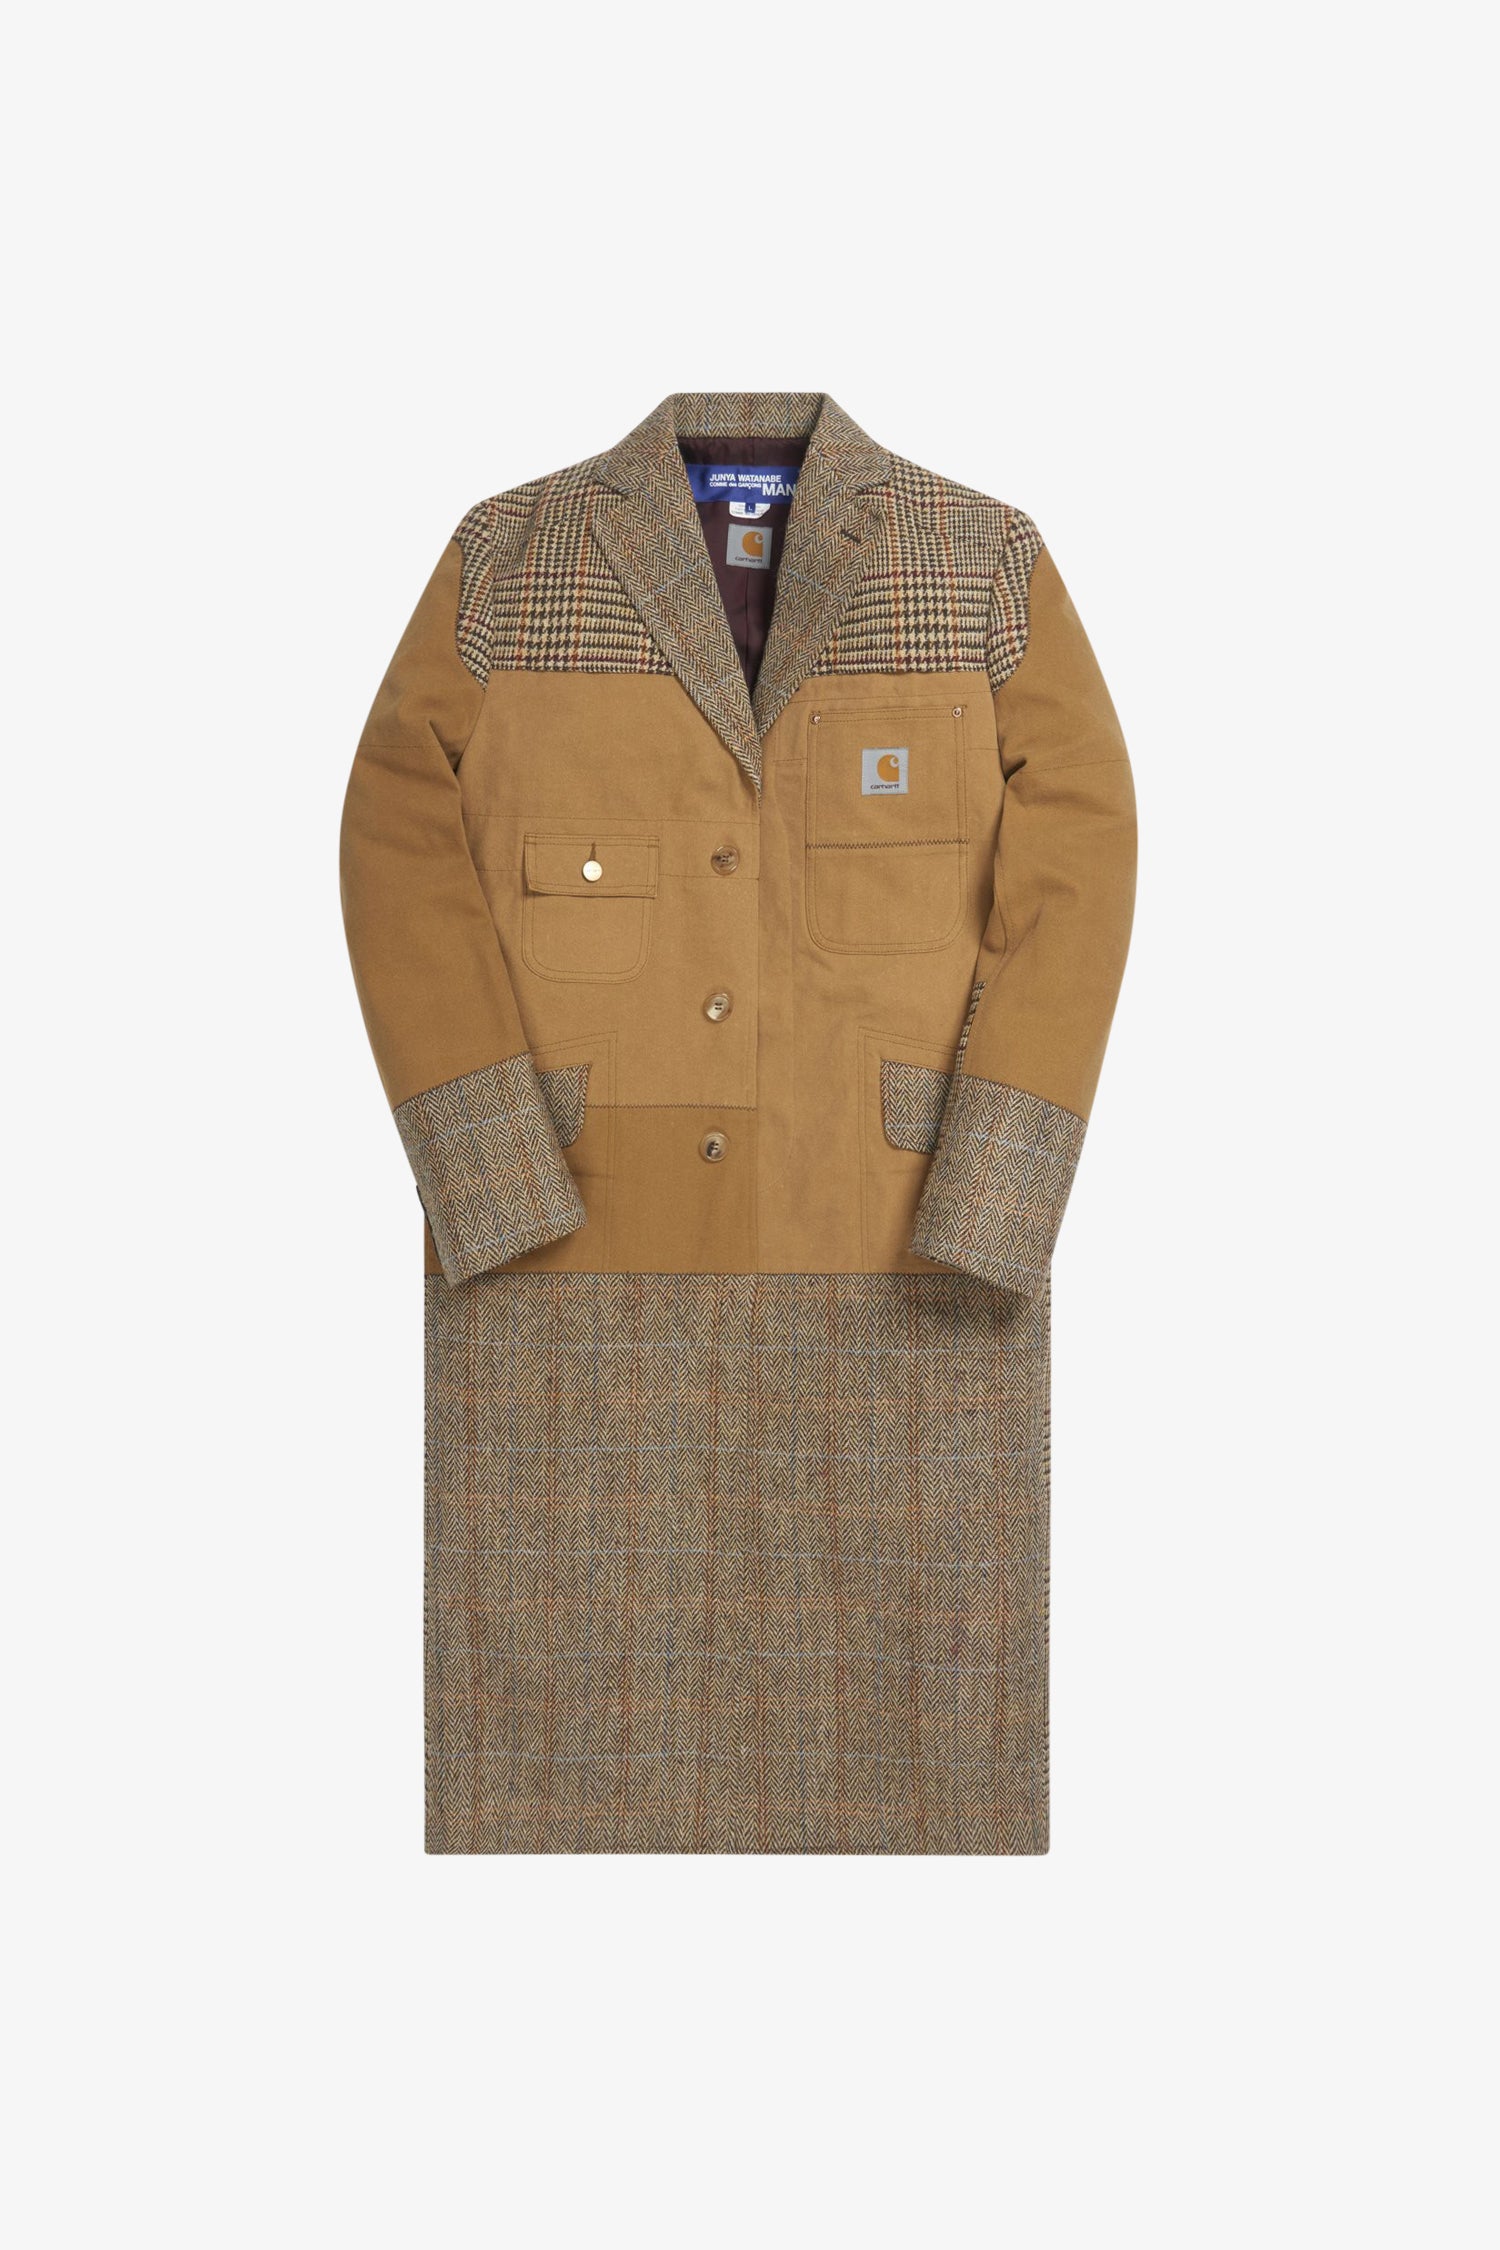 Selectshop FRAME - JUNYA WATANABE MAN Carhartt Tweed Coat Outerwear Dubai